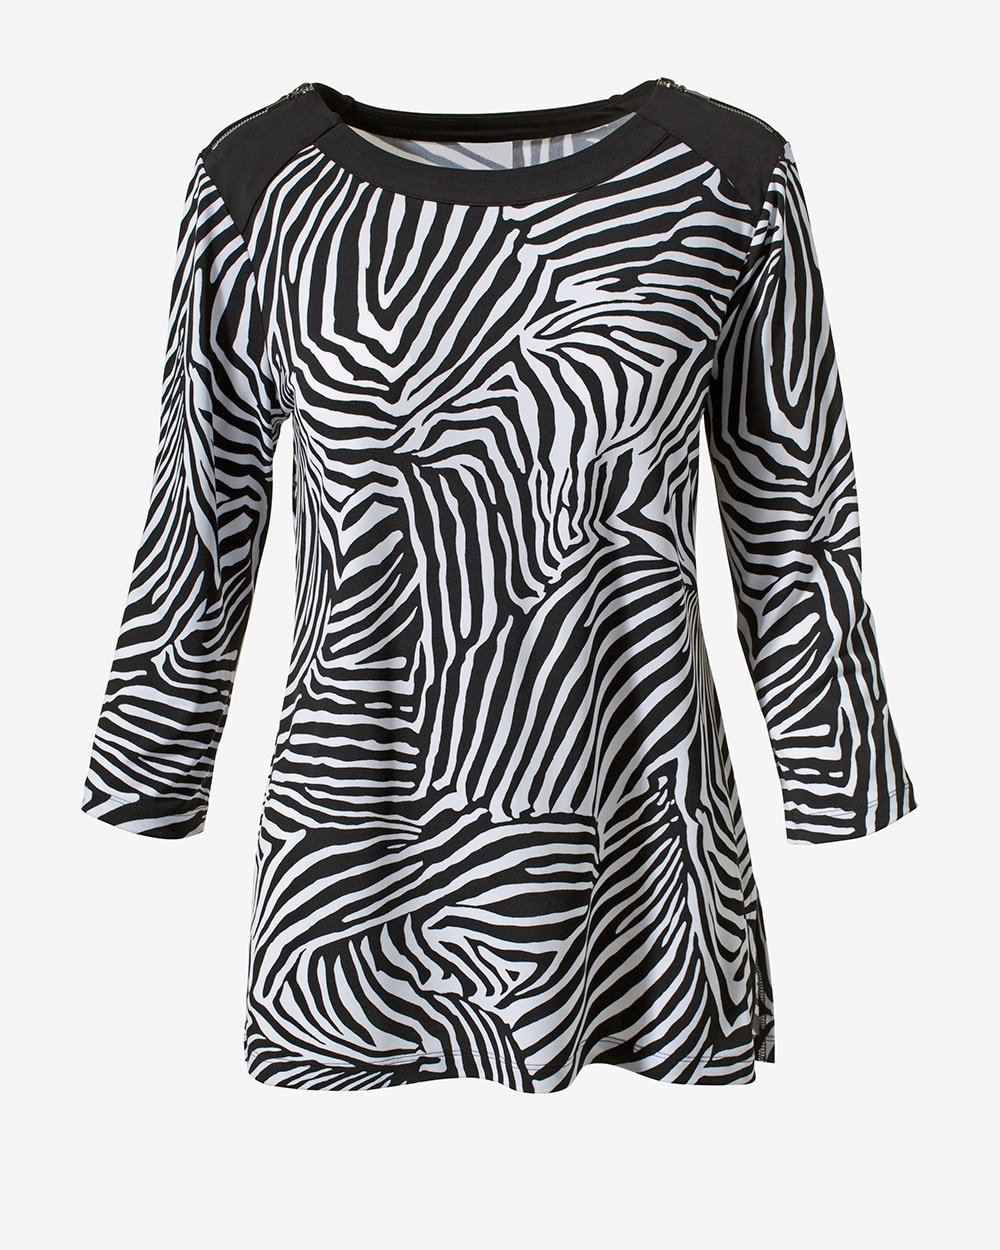 Easywear Contemporary Zebra Tunic